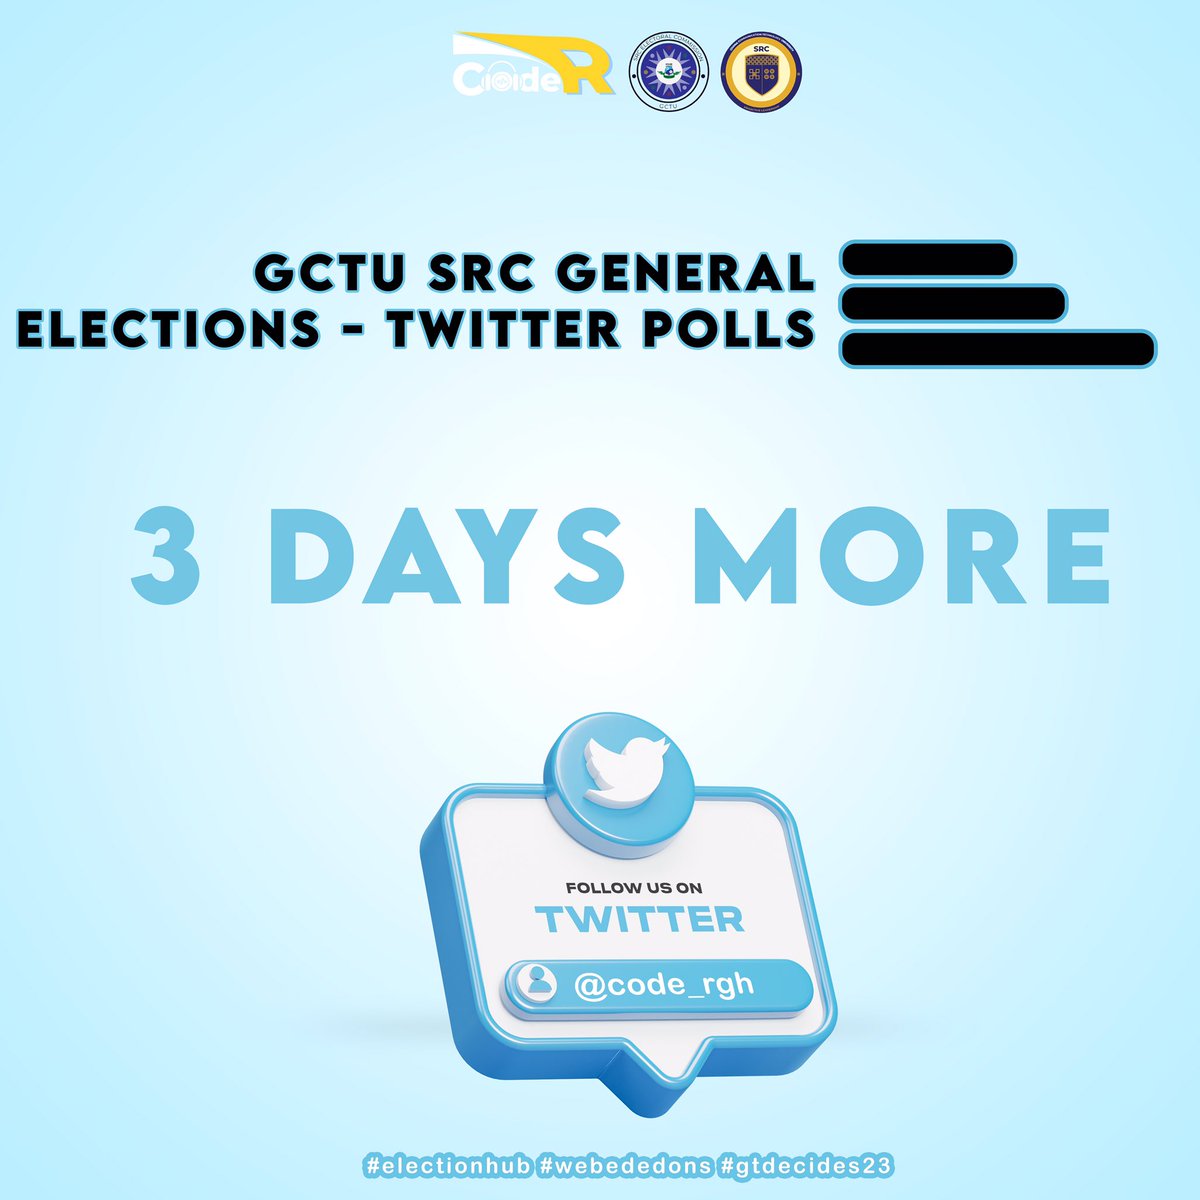 GCTU SRC Elections Twitter Polls. 3 Days more

#electionhub #gtdecides23